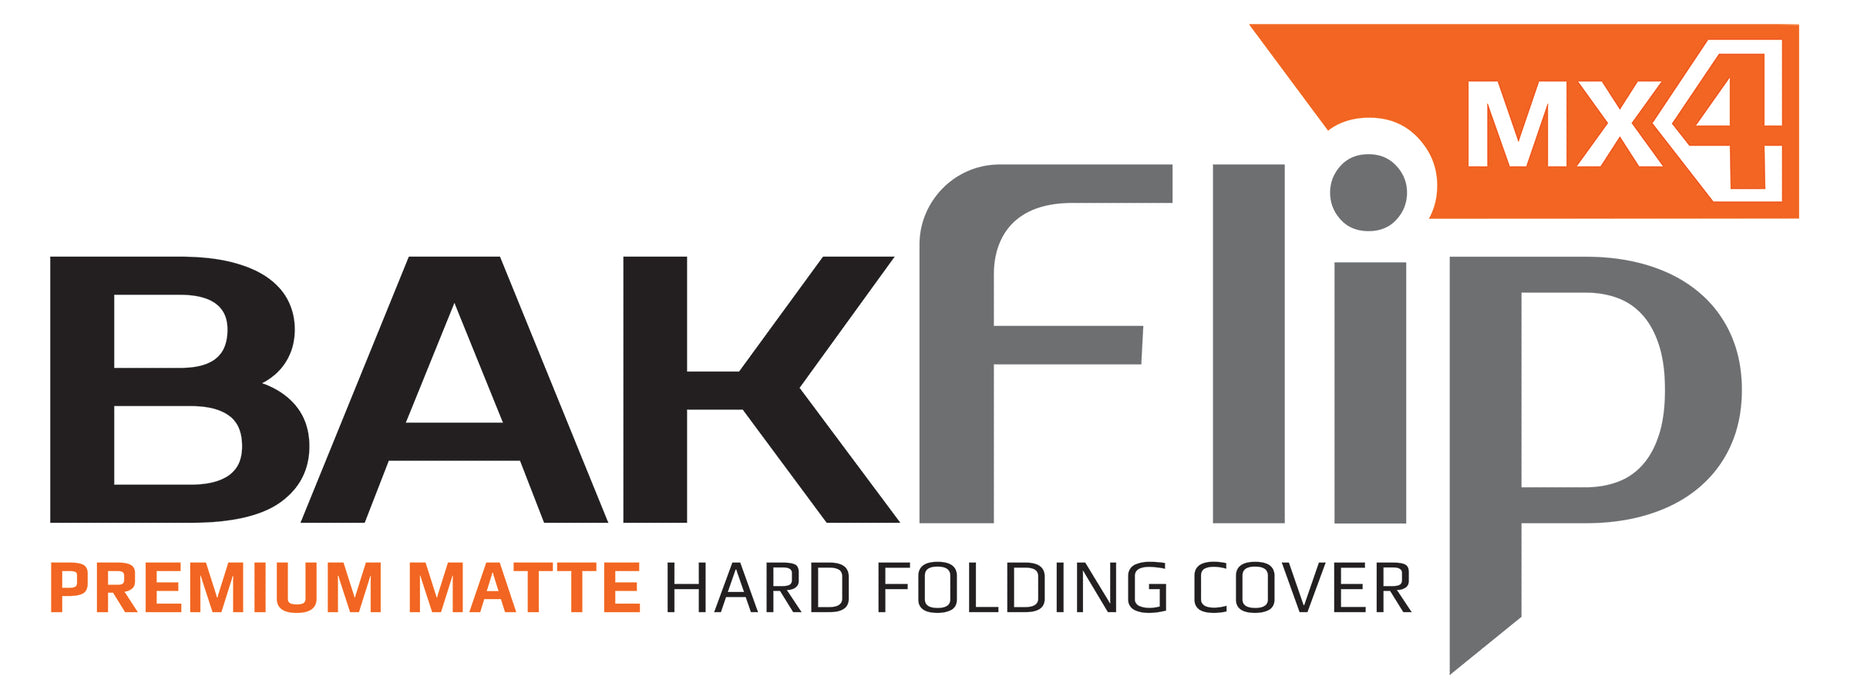 BAK BAKFlip MX4 Hard Folding Truck Bed Cover Matte Finish Fits -22 GM Silverado, Sierra HD 2500/3500 6.10ft Bed Model 448133